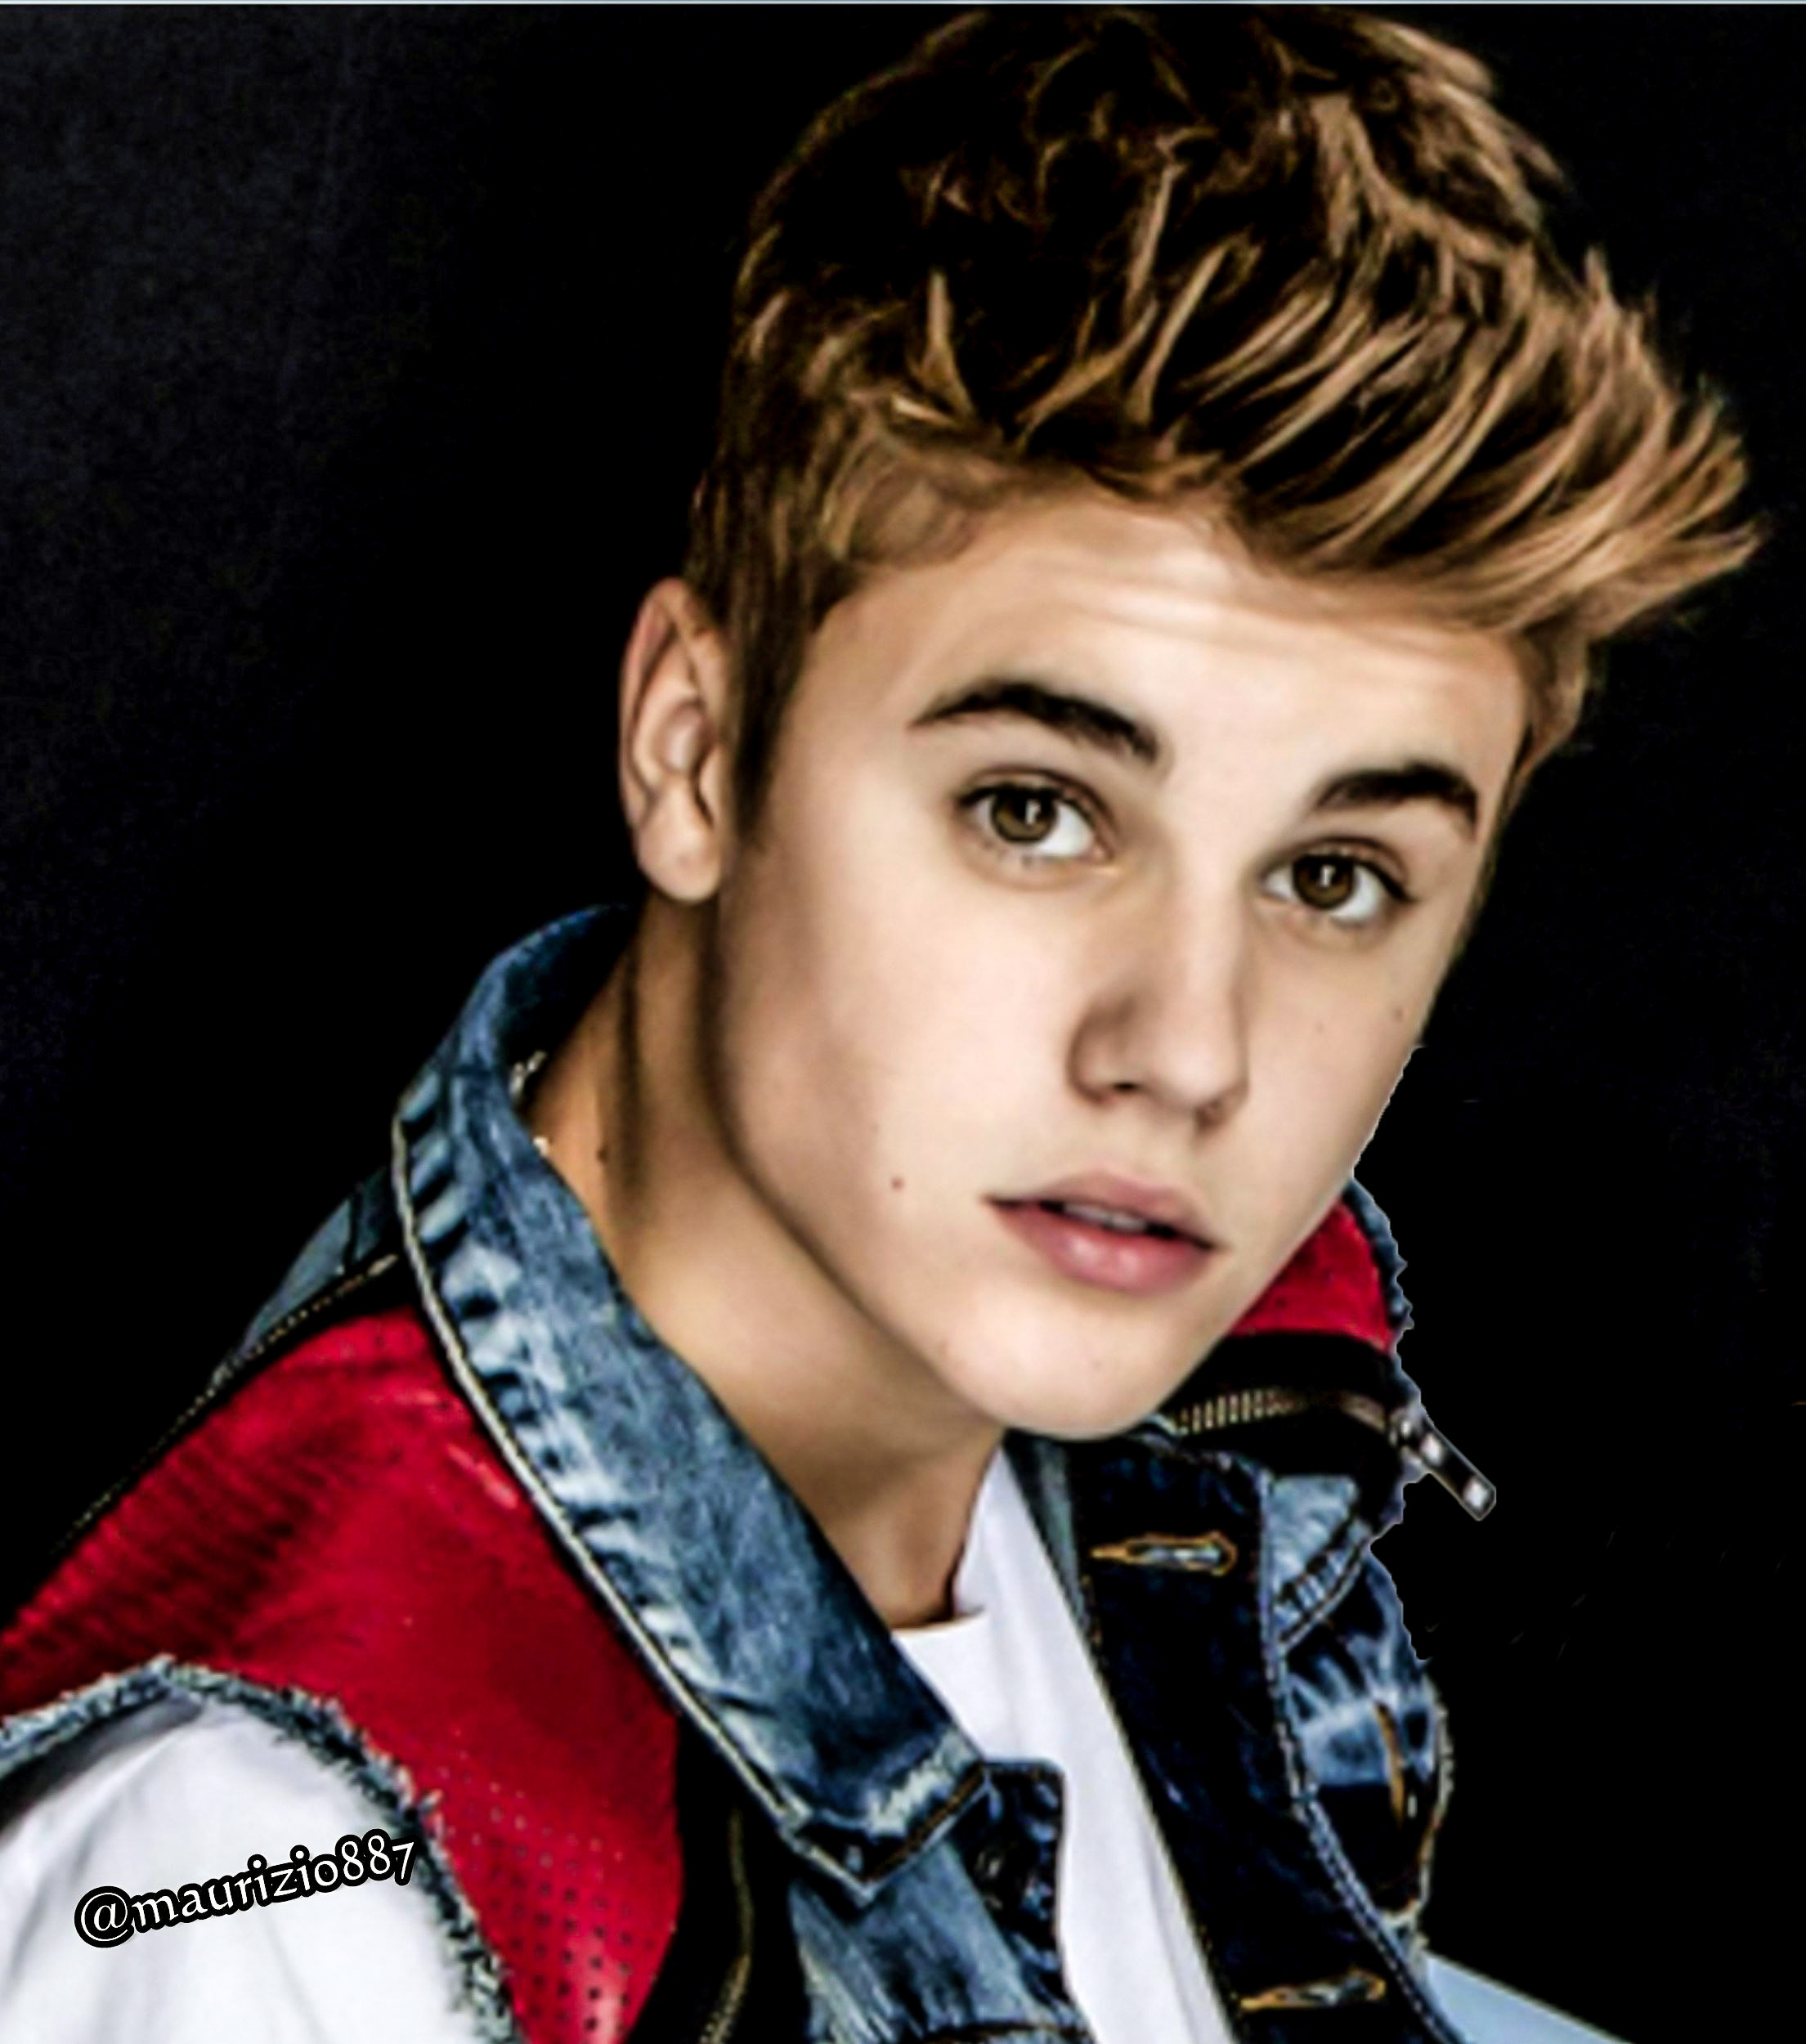 justin bieber 2014 - Justin Bieber Photo (37065644) - Fanpop - Page 8